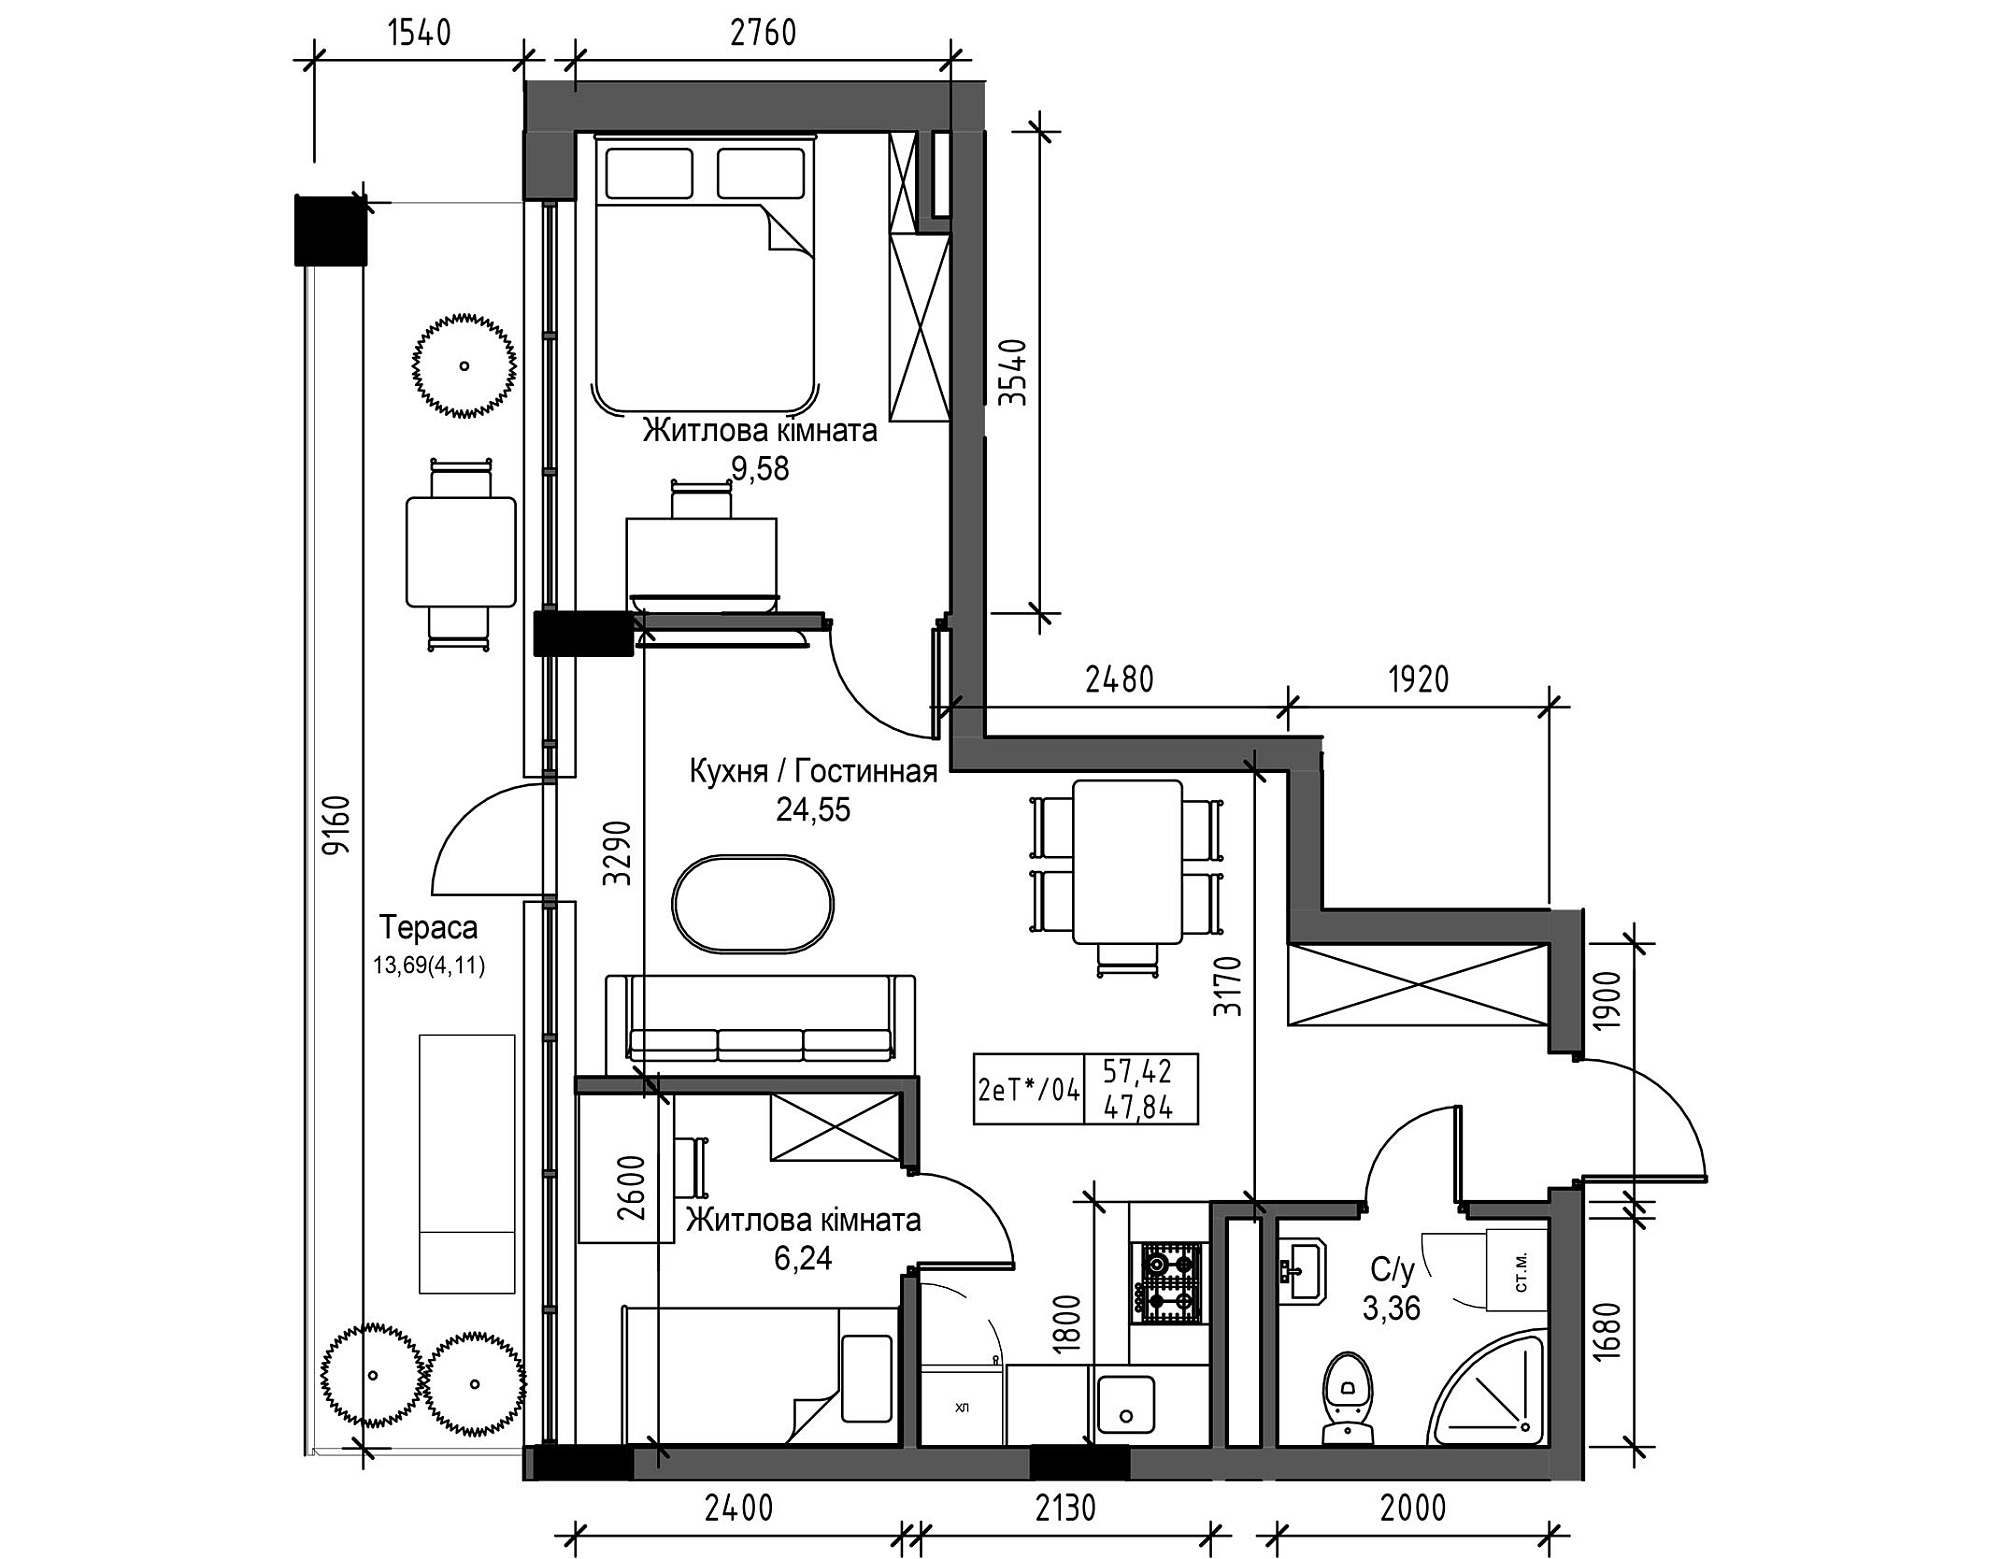 Planning 2-rm flats area 47.59m2, UM-003-09/0100.